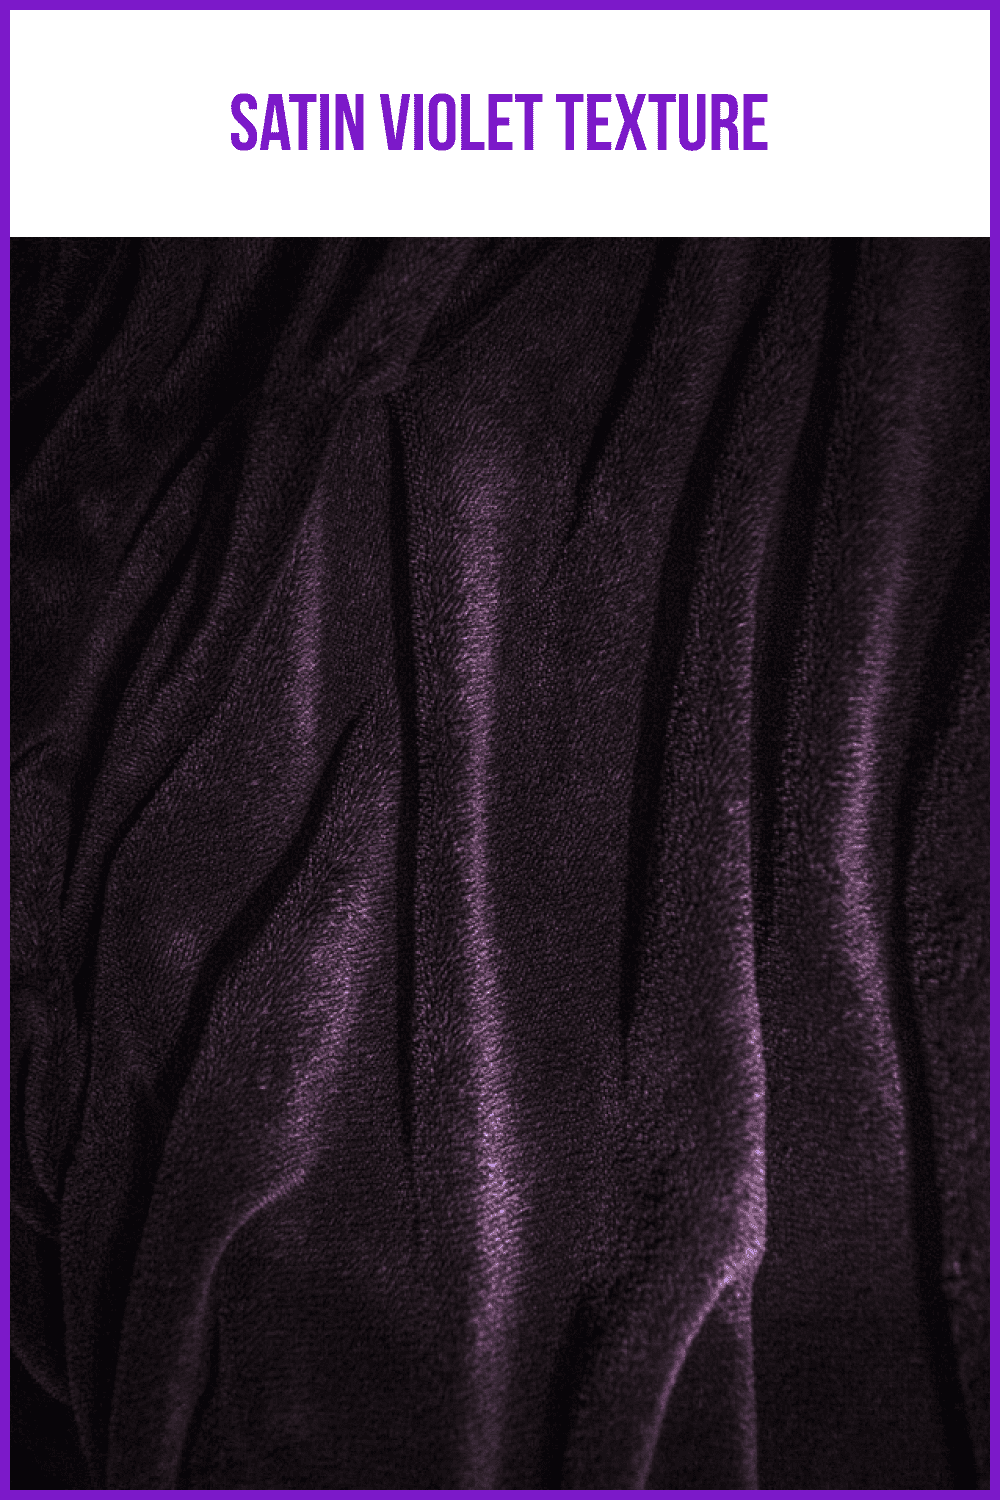 Satin Violet Texture.